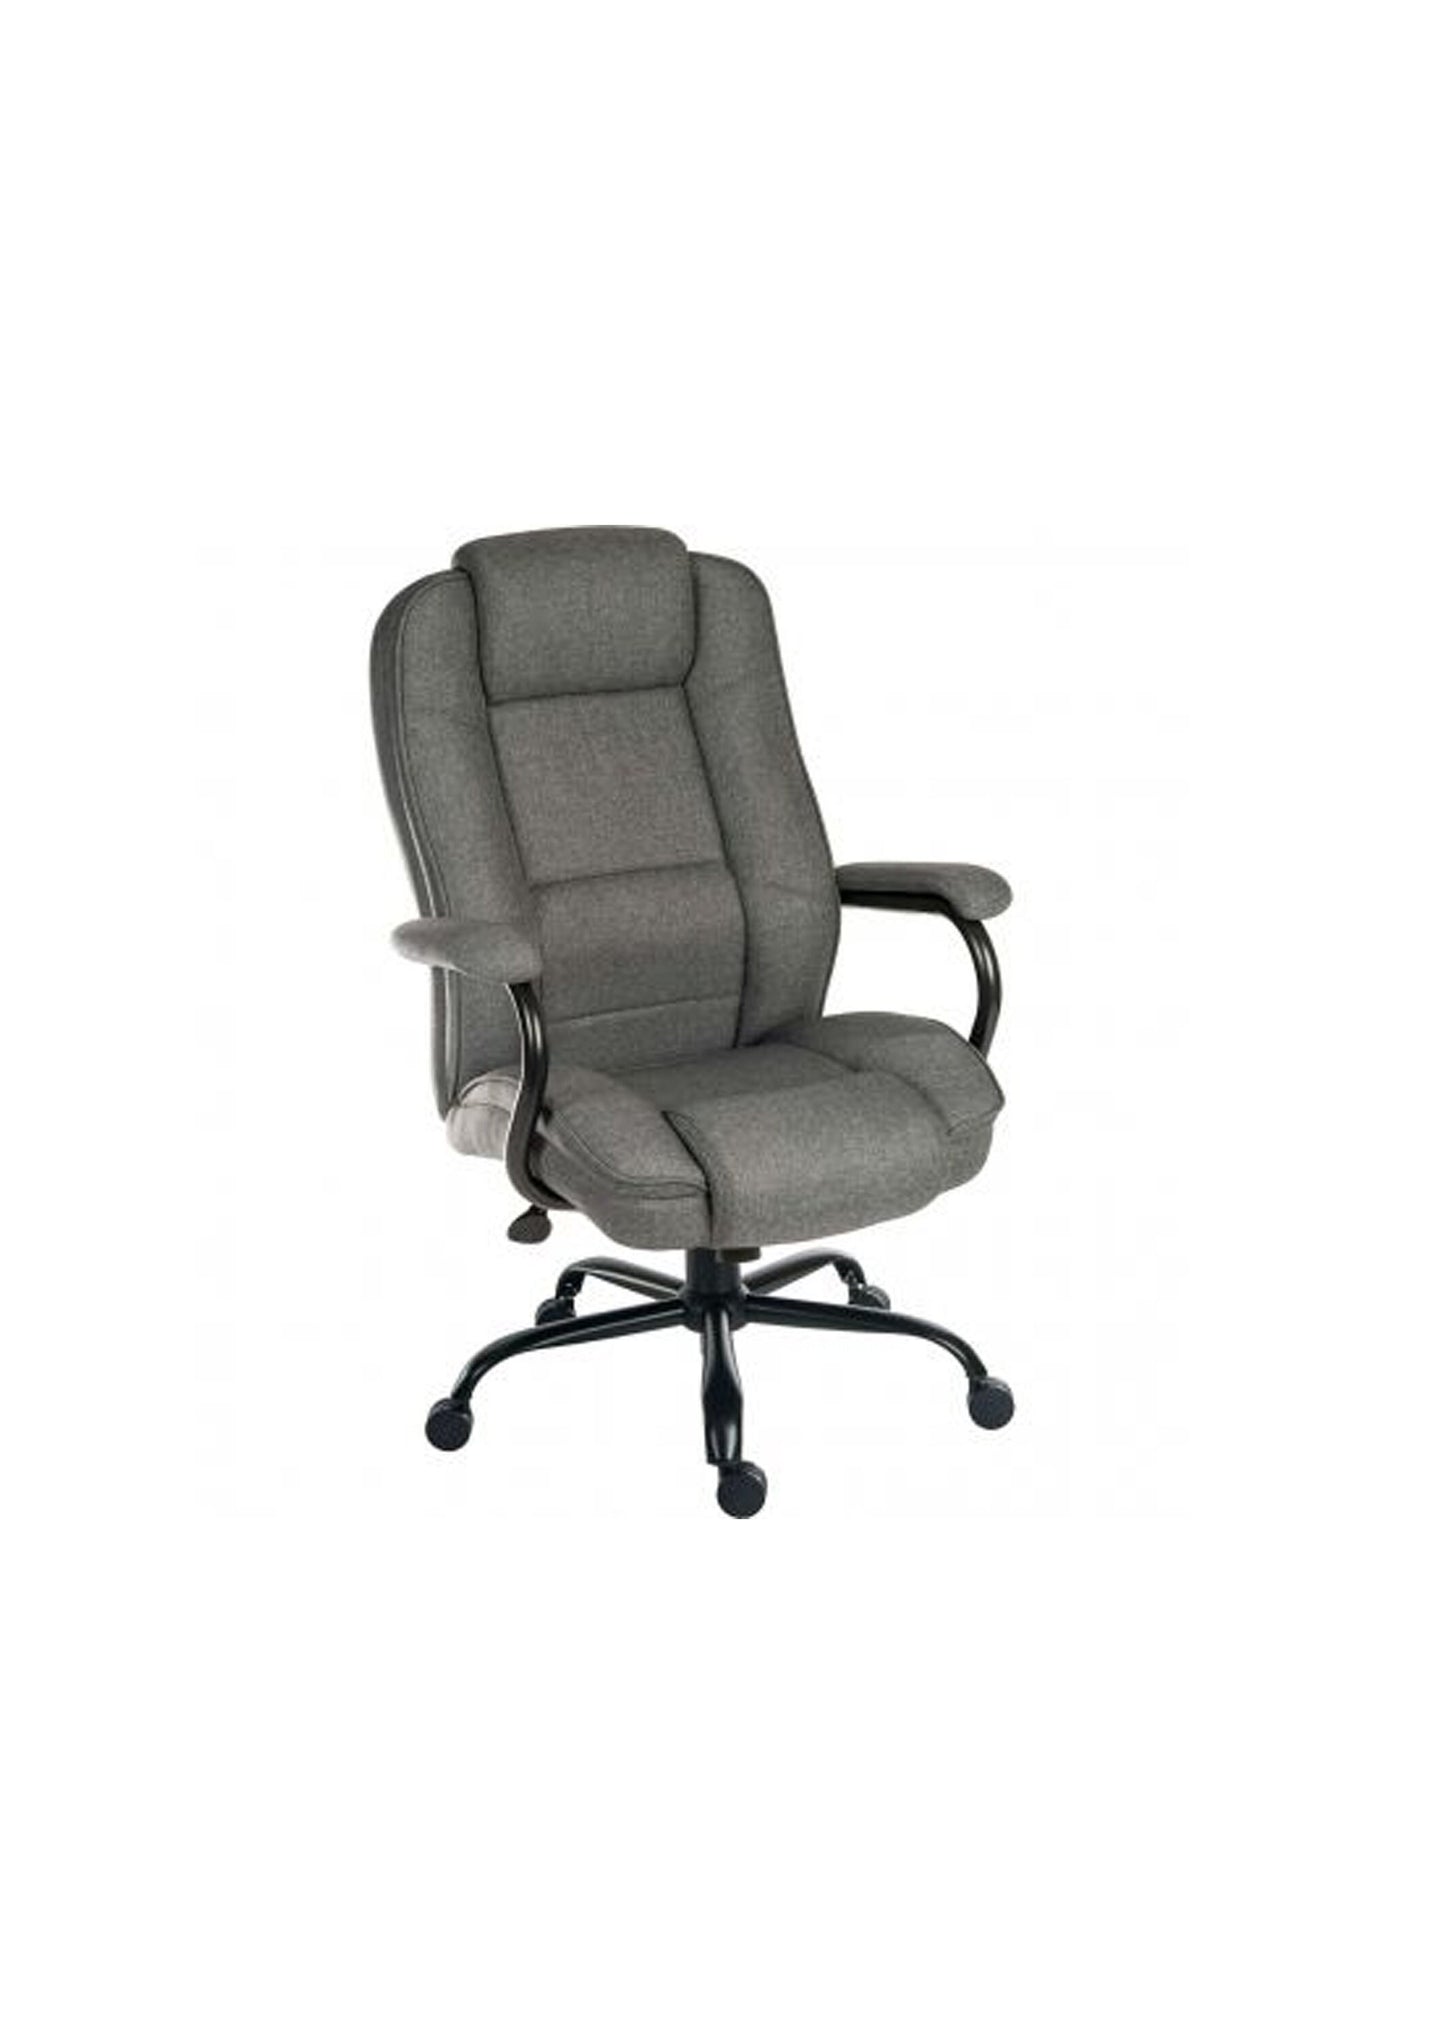 Executive grey fabric office chair 